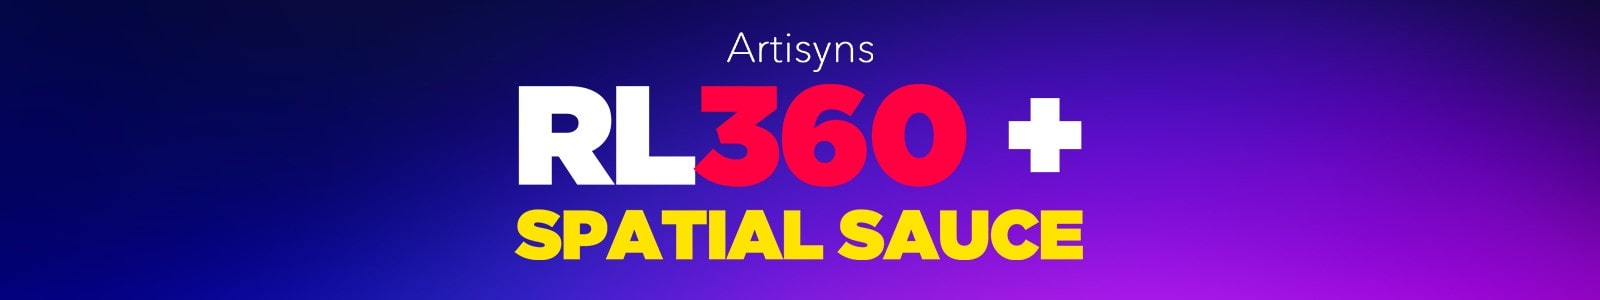 Artisyns rL360 Session + Spatial Sauce Bundle